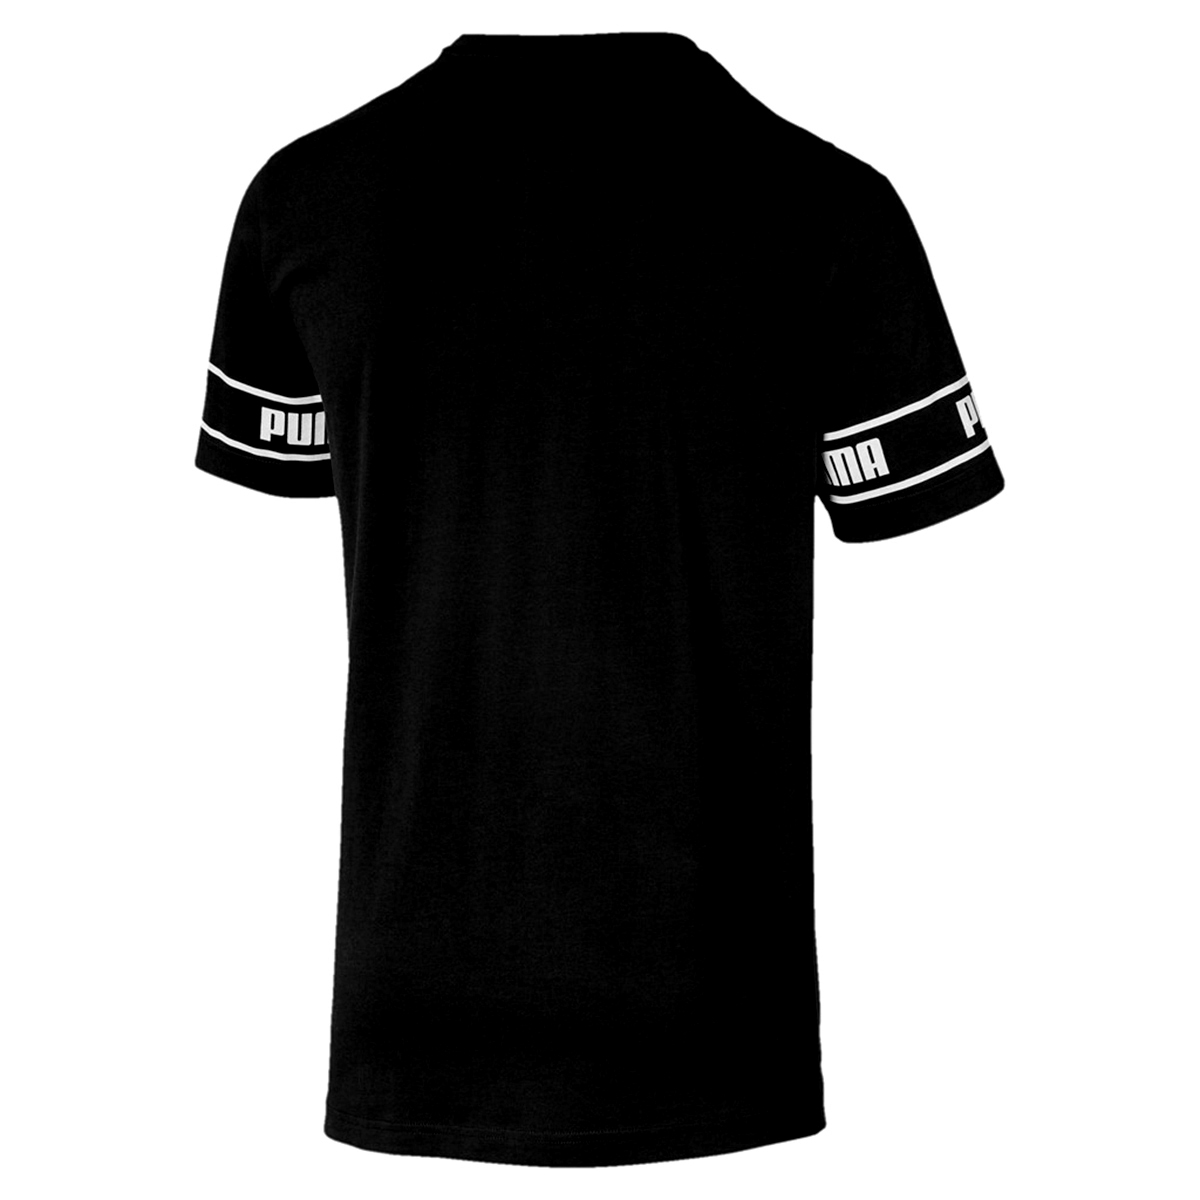 PUMA Herren Amplified Big Logo Tee T-Shirt 580426 01